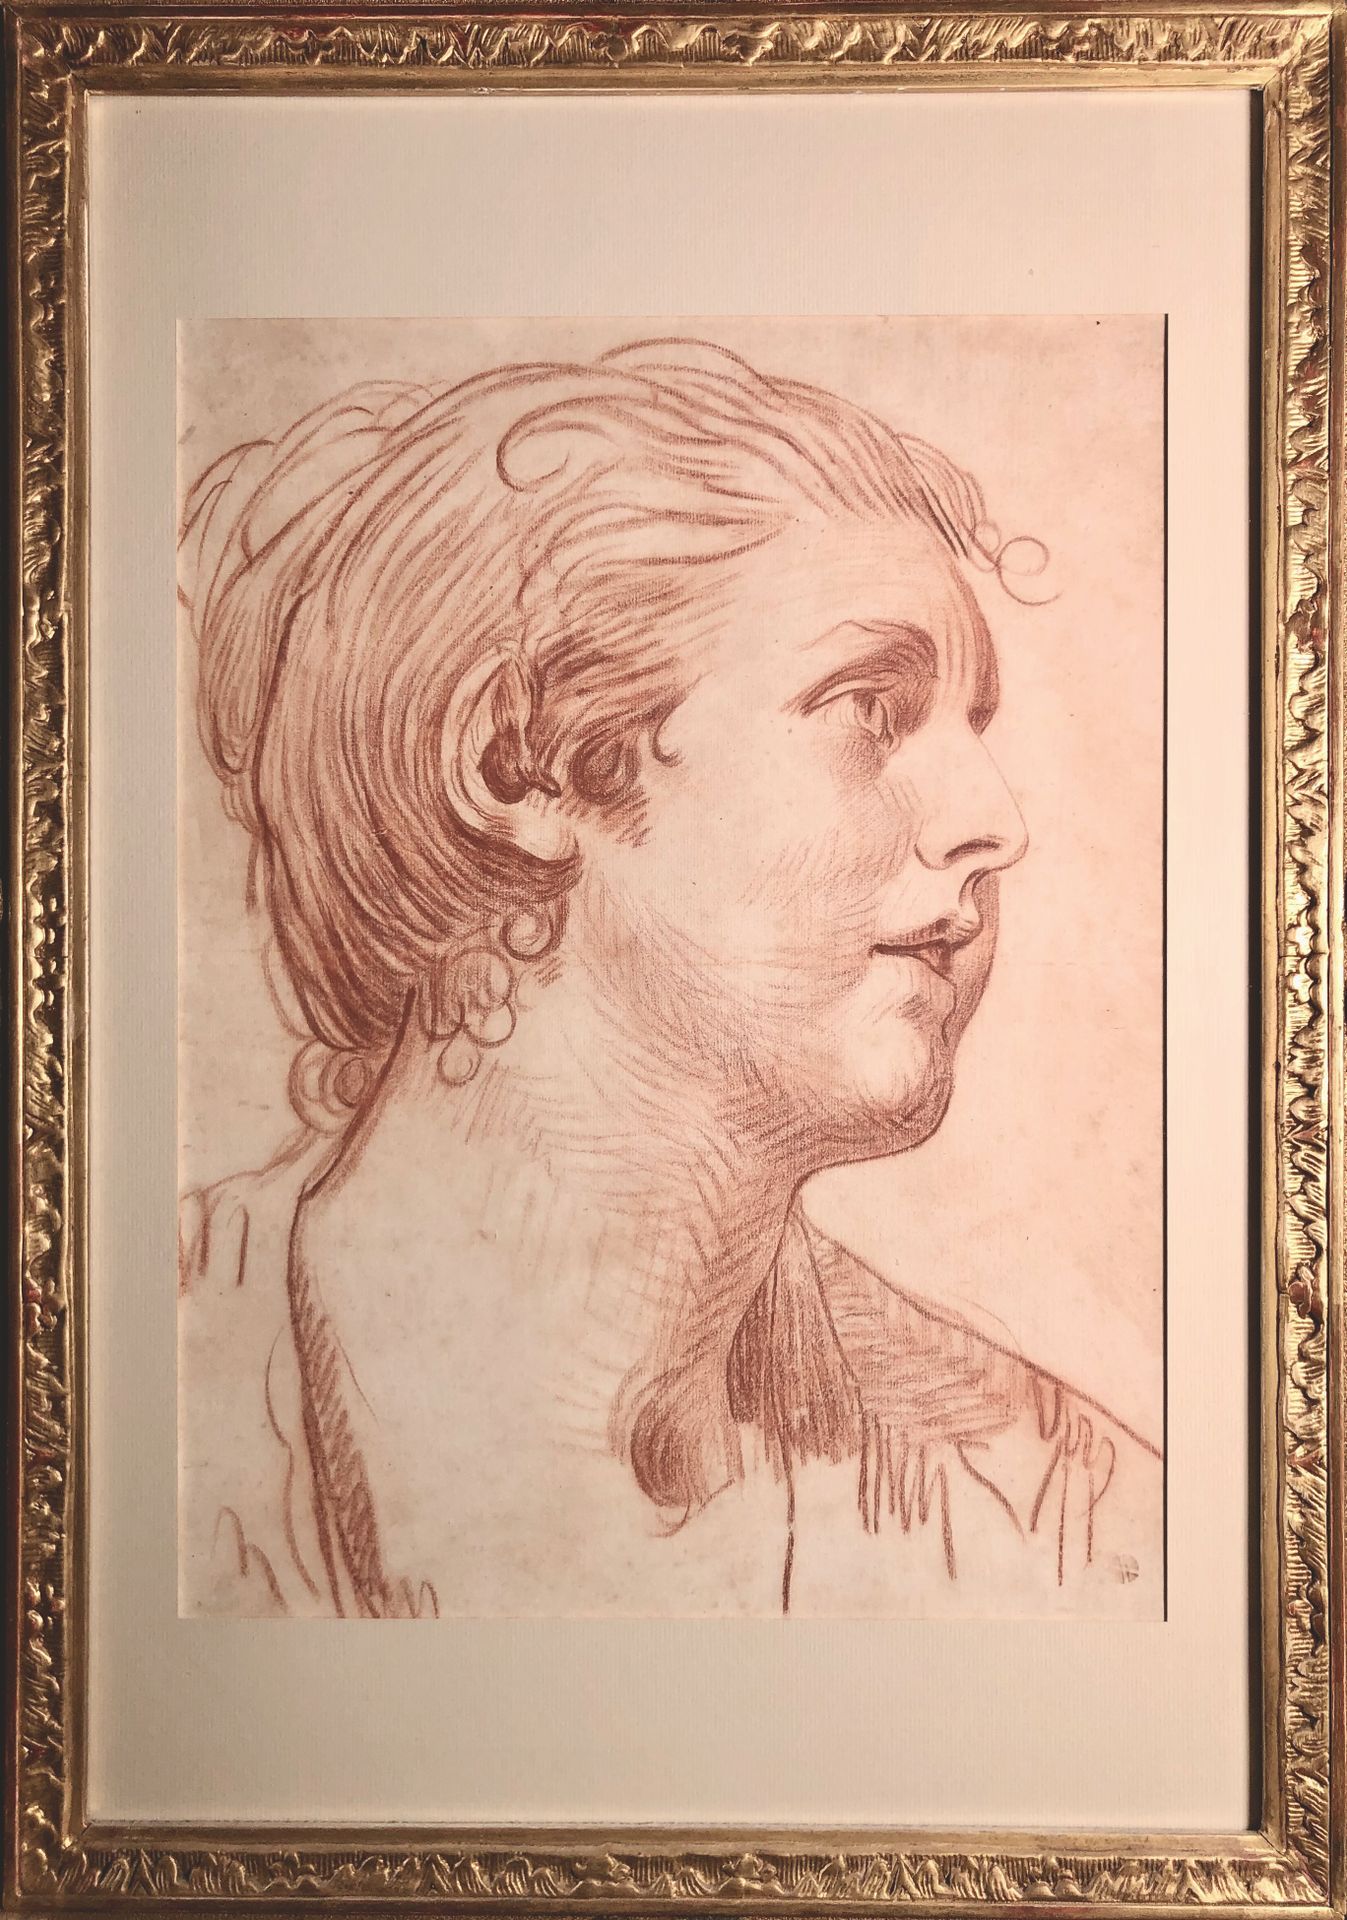 Null 让-巴蒂斯特-格吕泽（追随者）

一个女人的头部轮廓。

珊珊。右下角有盖章的痕迹。

视图：40,5 x 31 cm